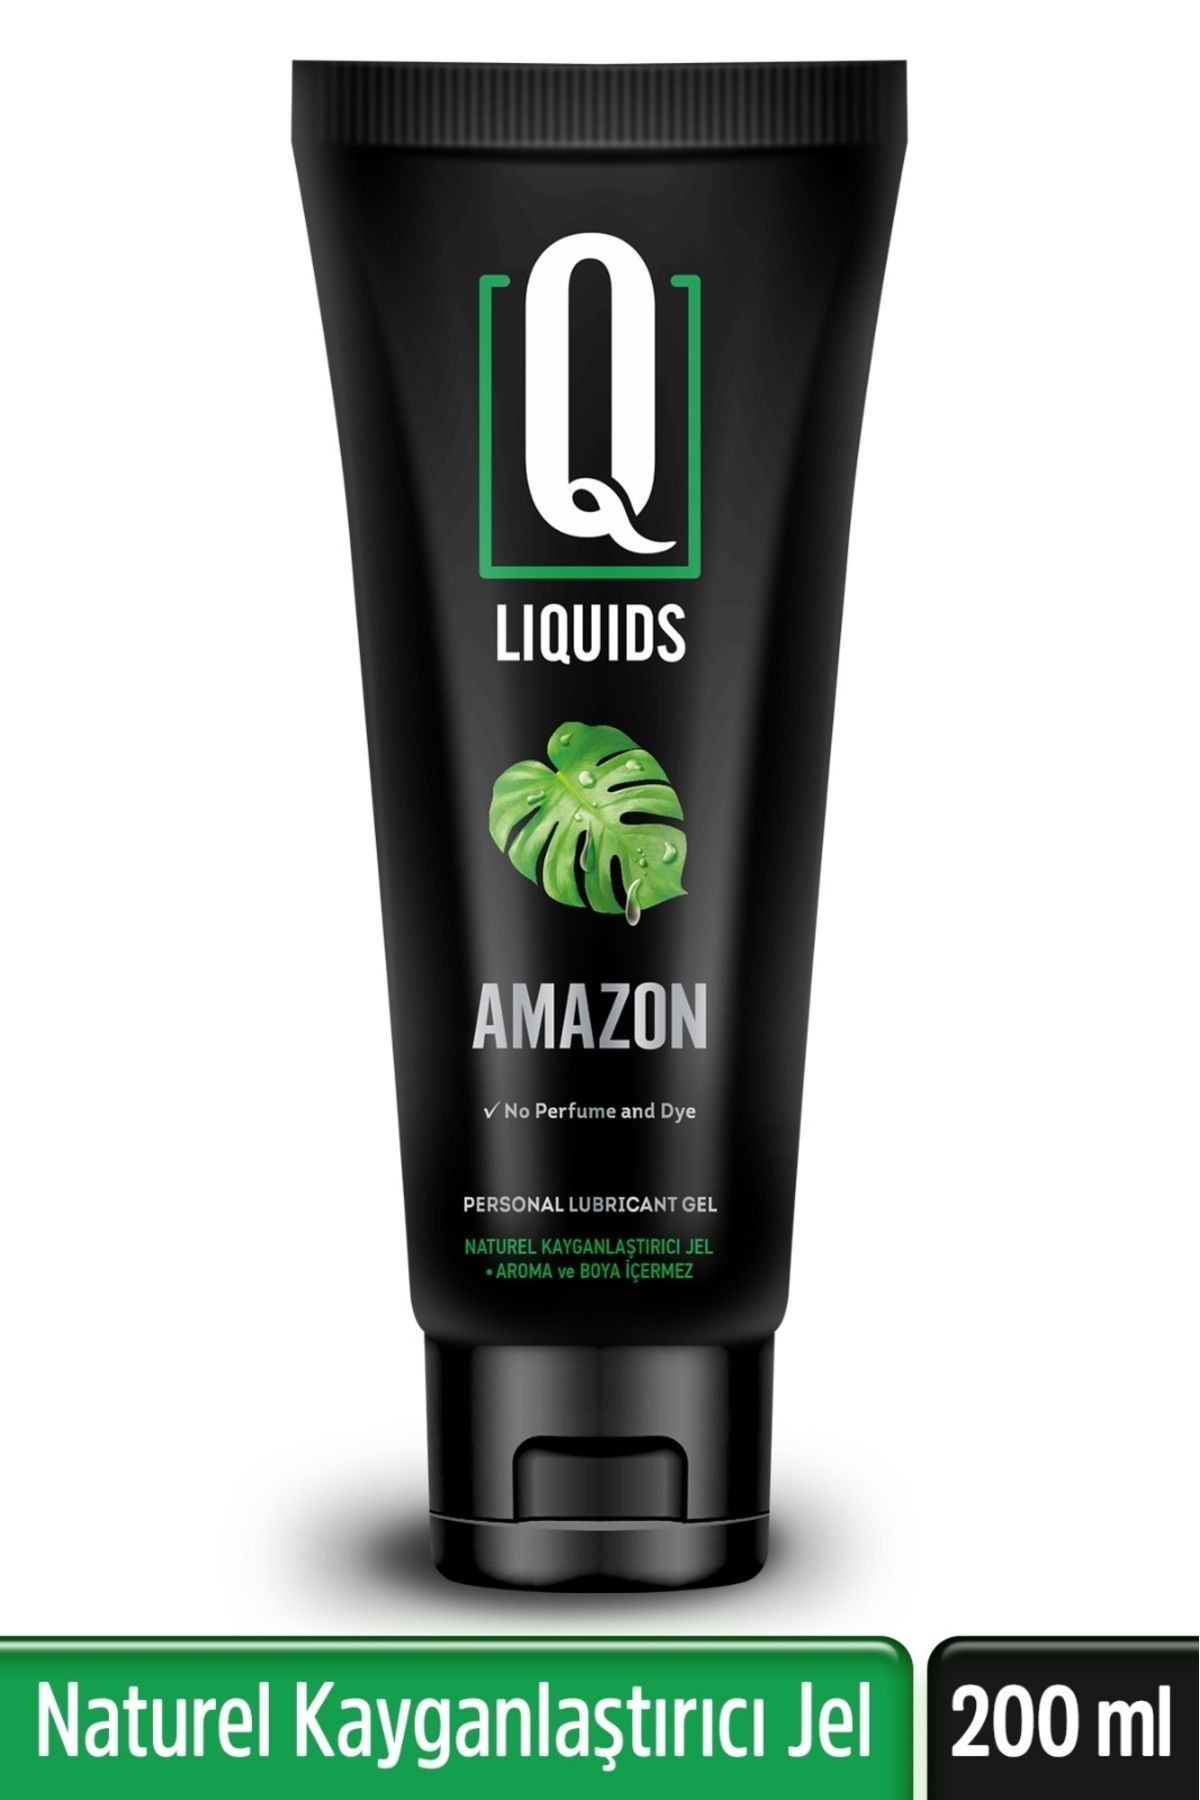 Q LIQUIDS Amazon Naturel Kayganlaştırıcı Jel 200ml Lubricant Gel